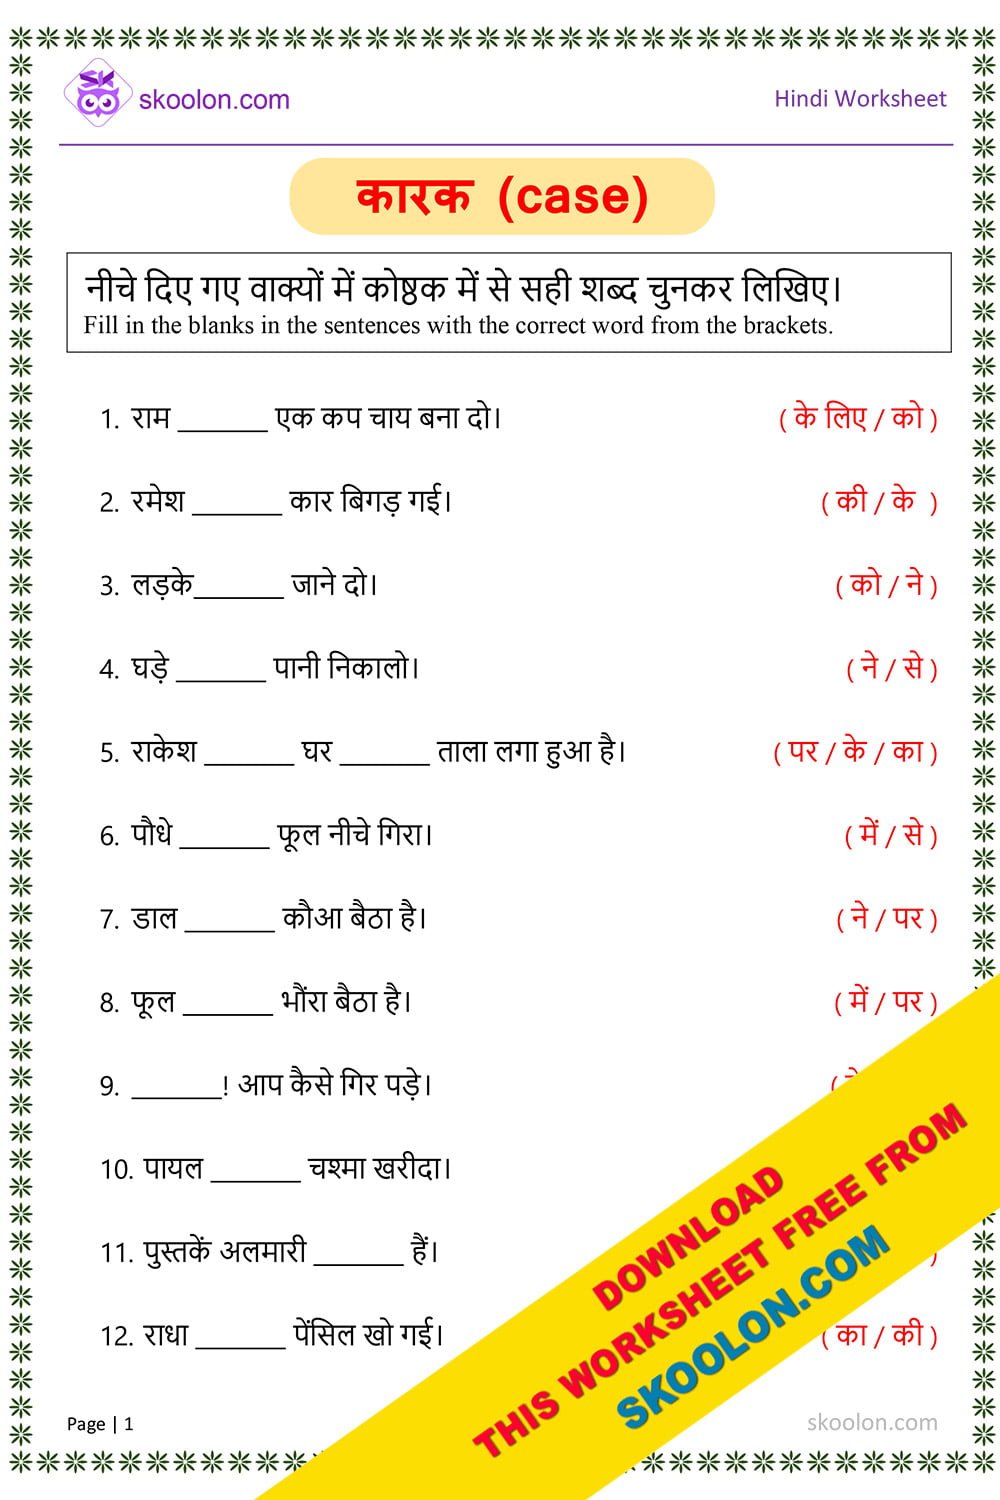 Karak Hindi Grammar Worksheet-4 - skoolon.com